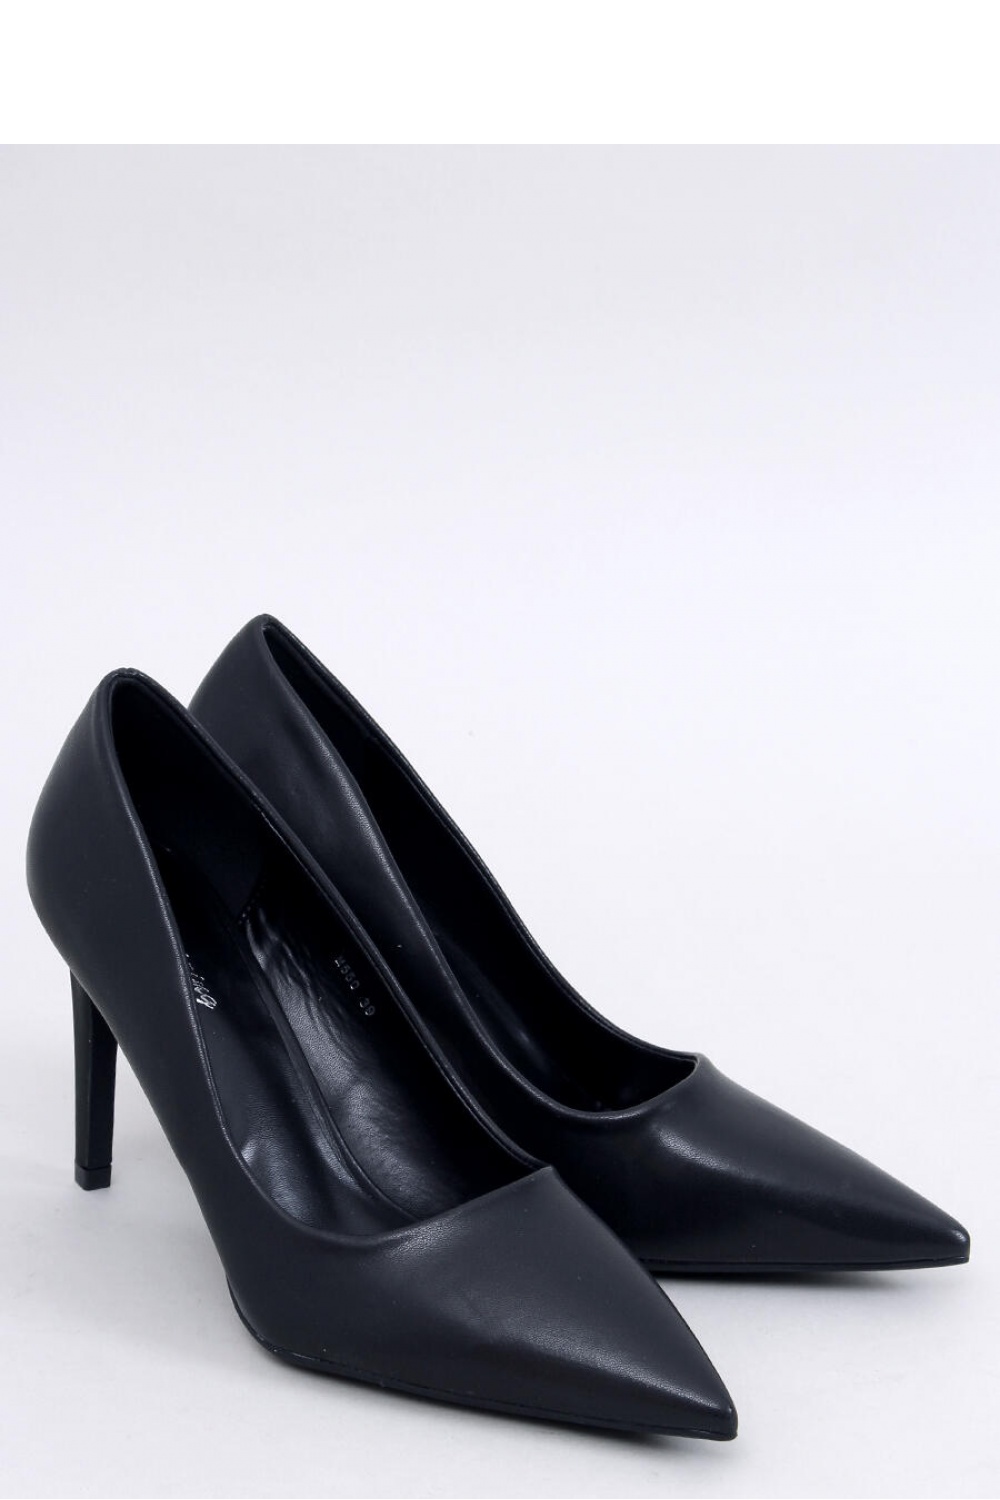 Strappy high heels model 19337..